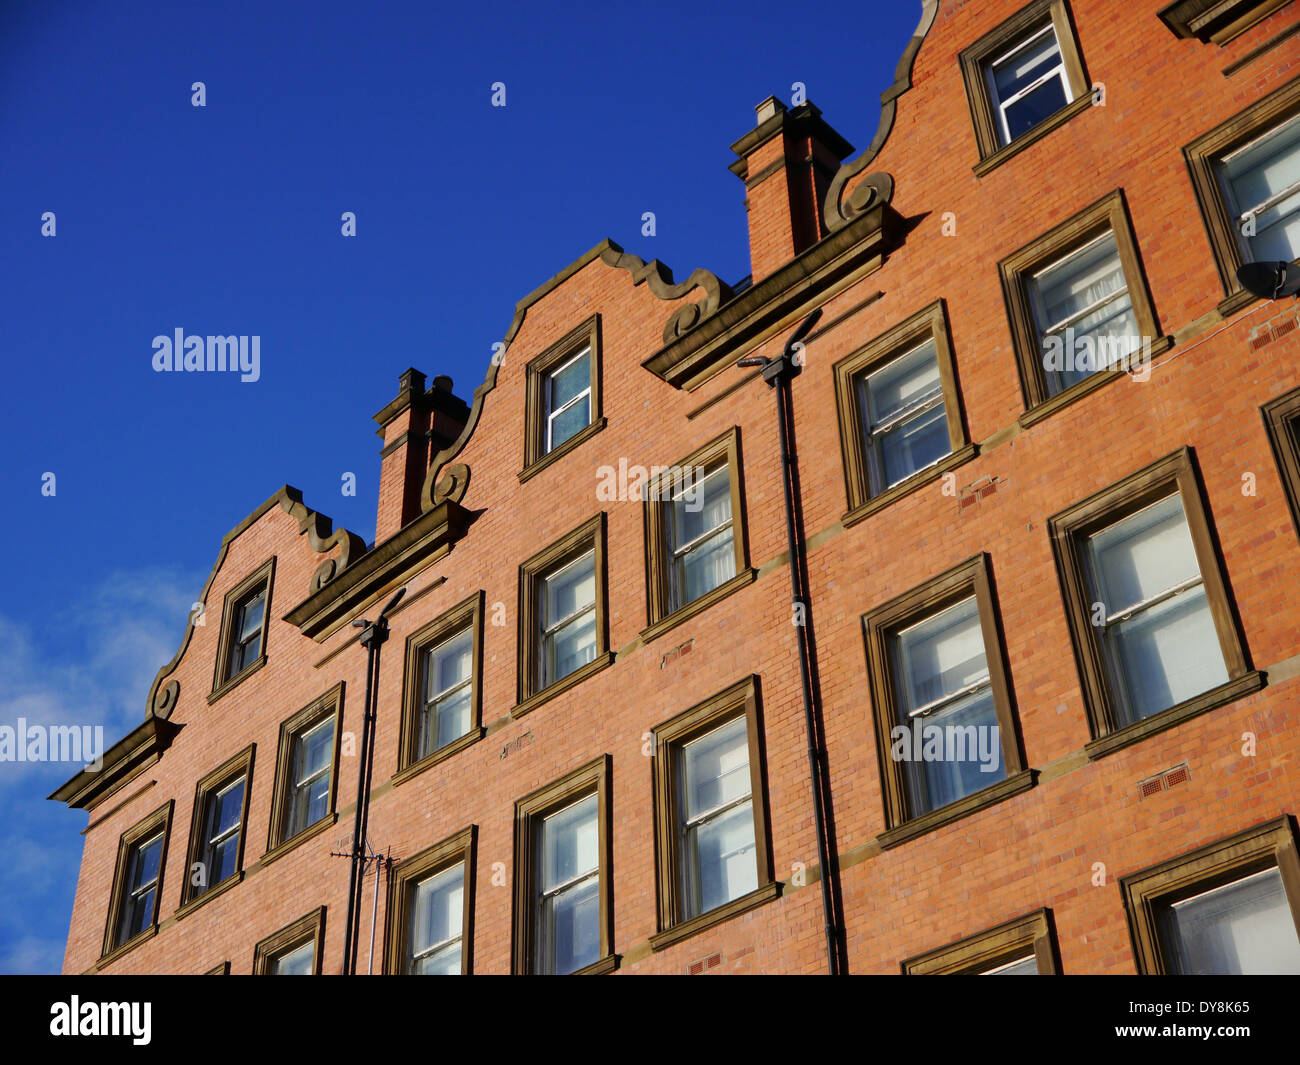 Brick architecture - residential apartments, Newcastle upon Tyne, England, UK Stock Photo